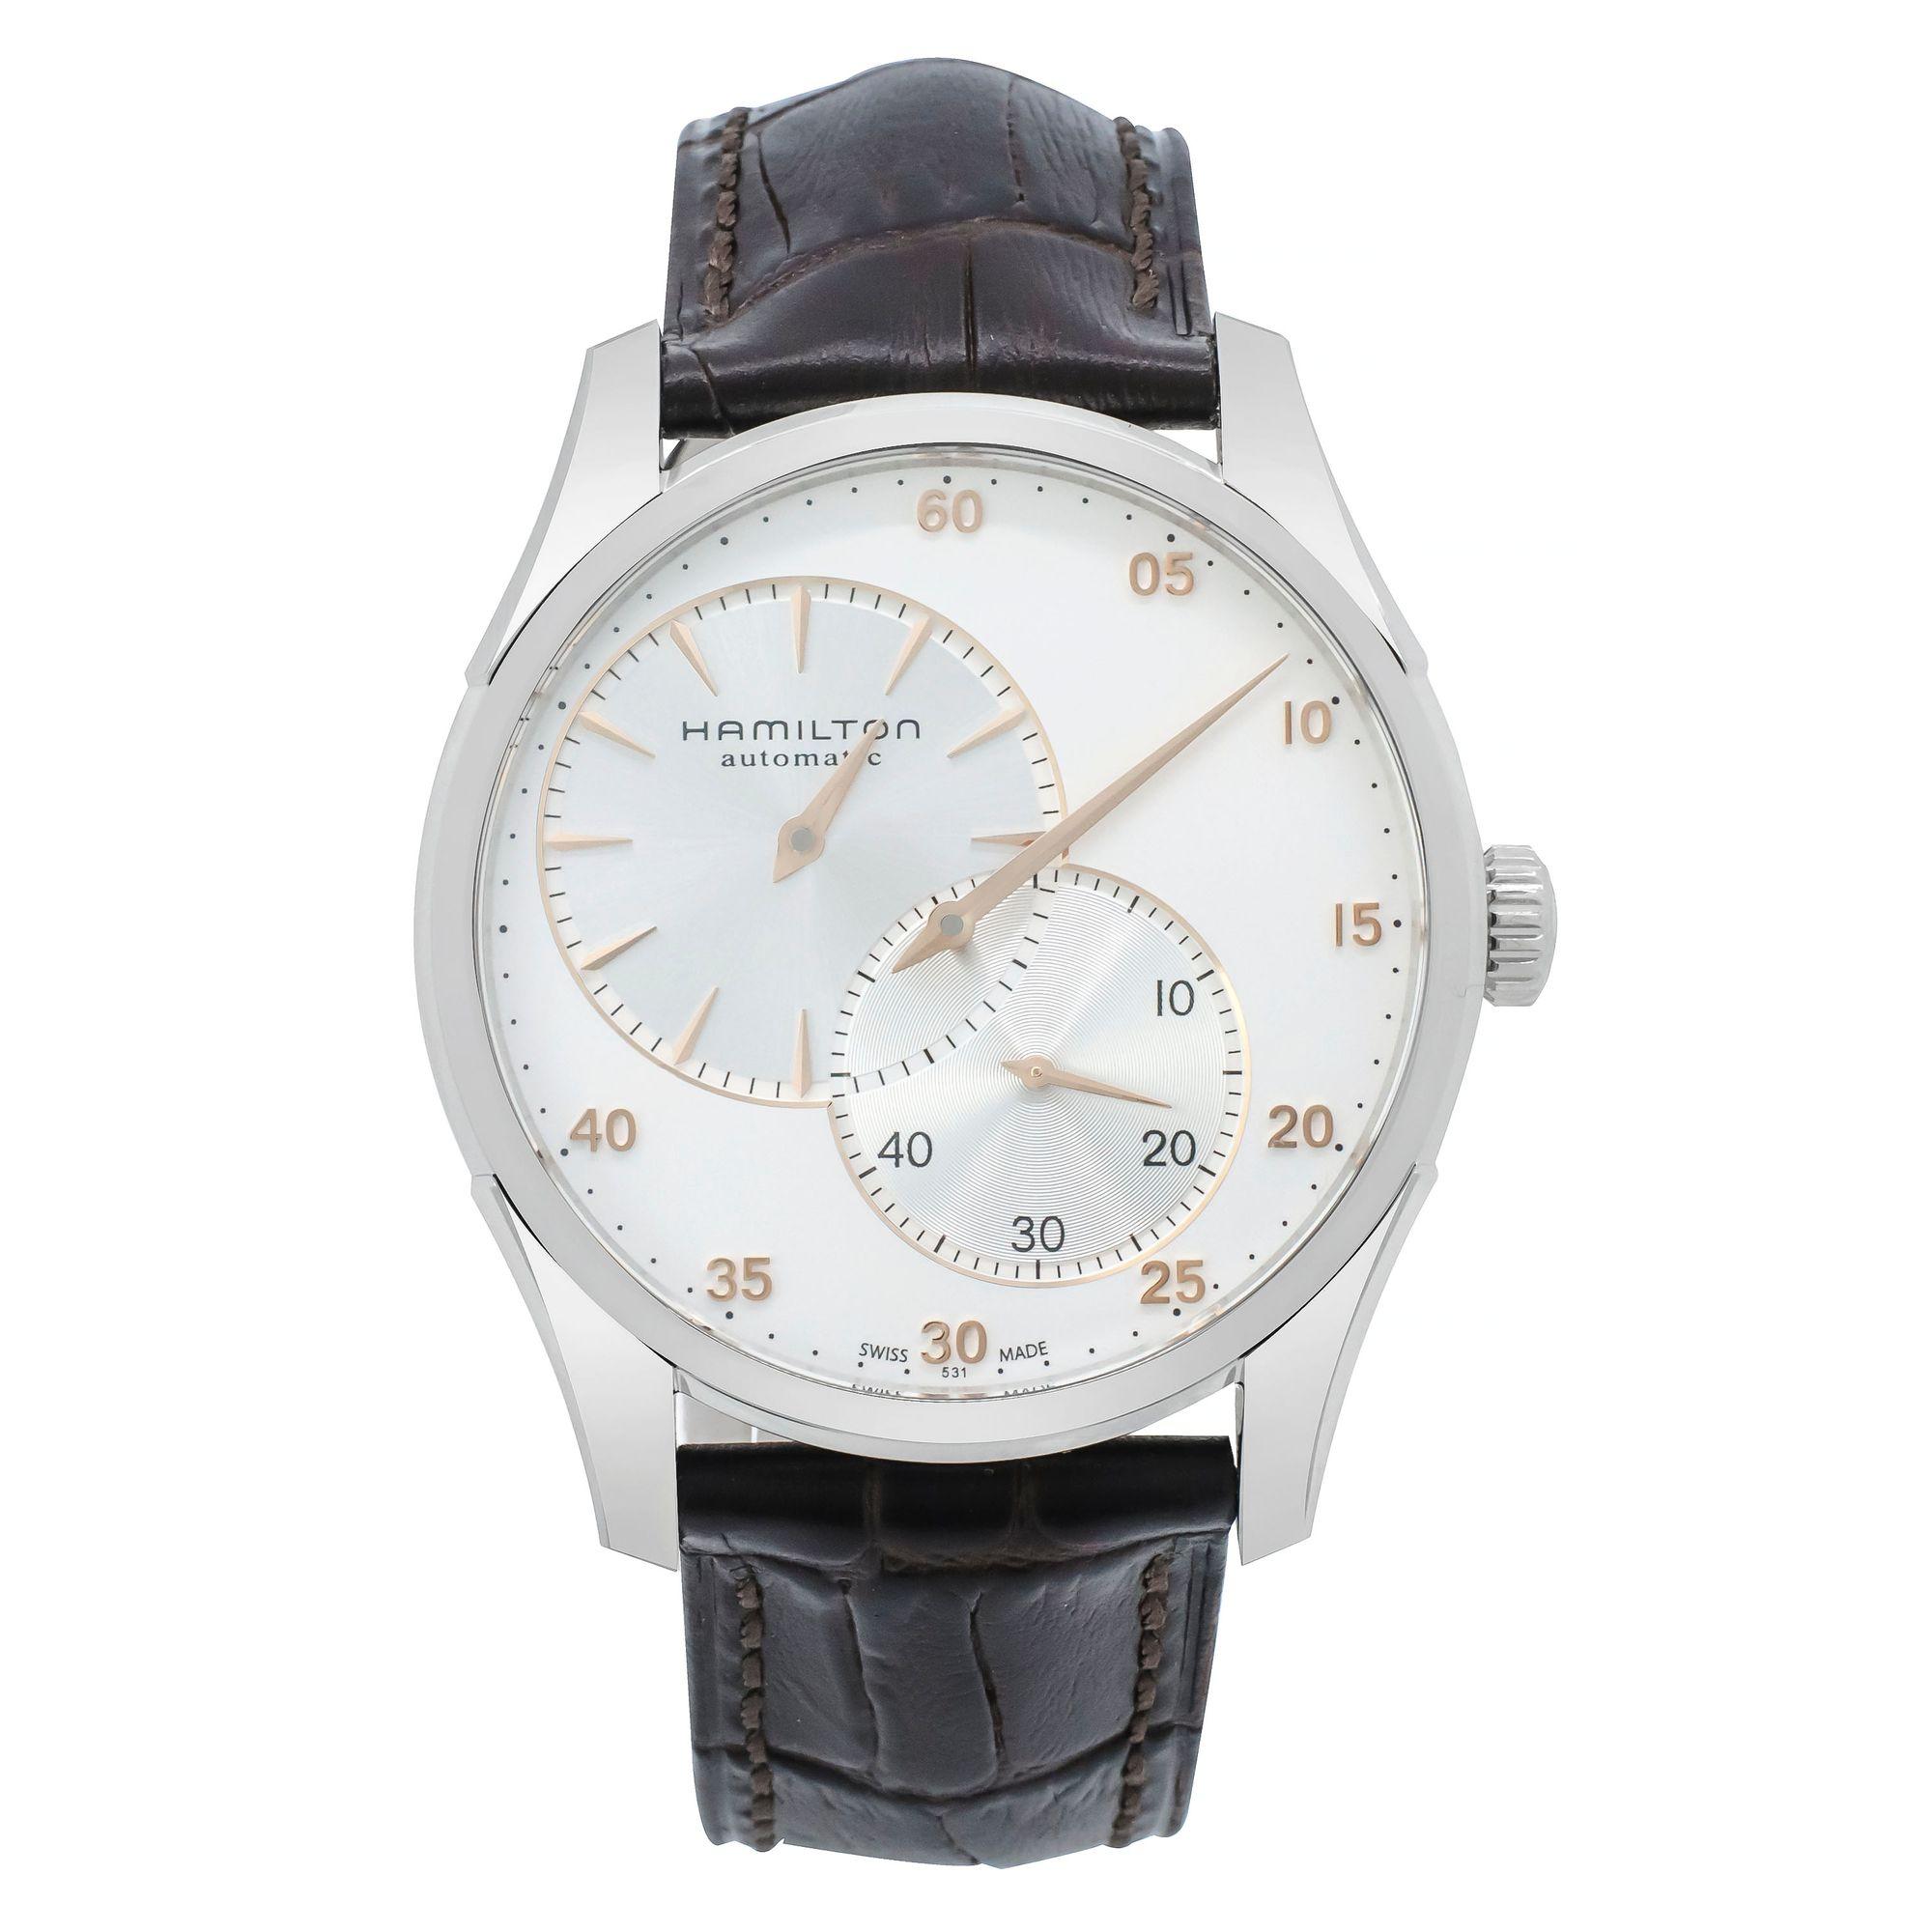 Hamilton Mens Jazzmaster Regulator Automatic Watch for $595 Shipped